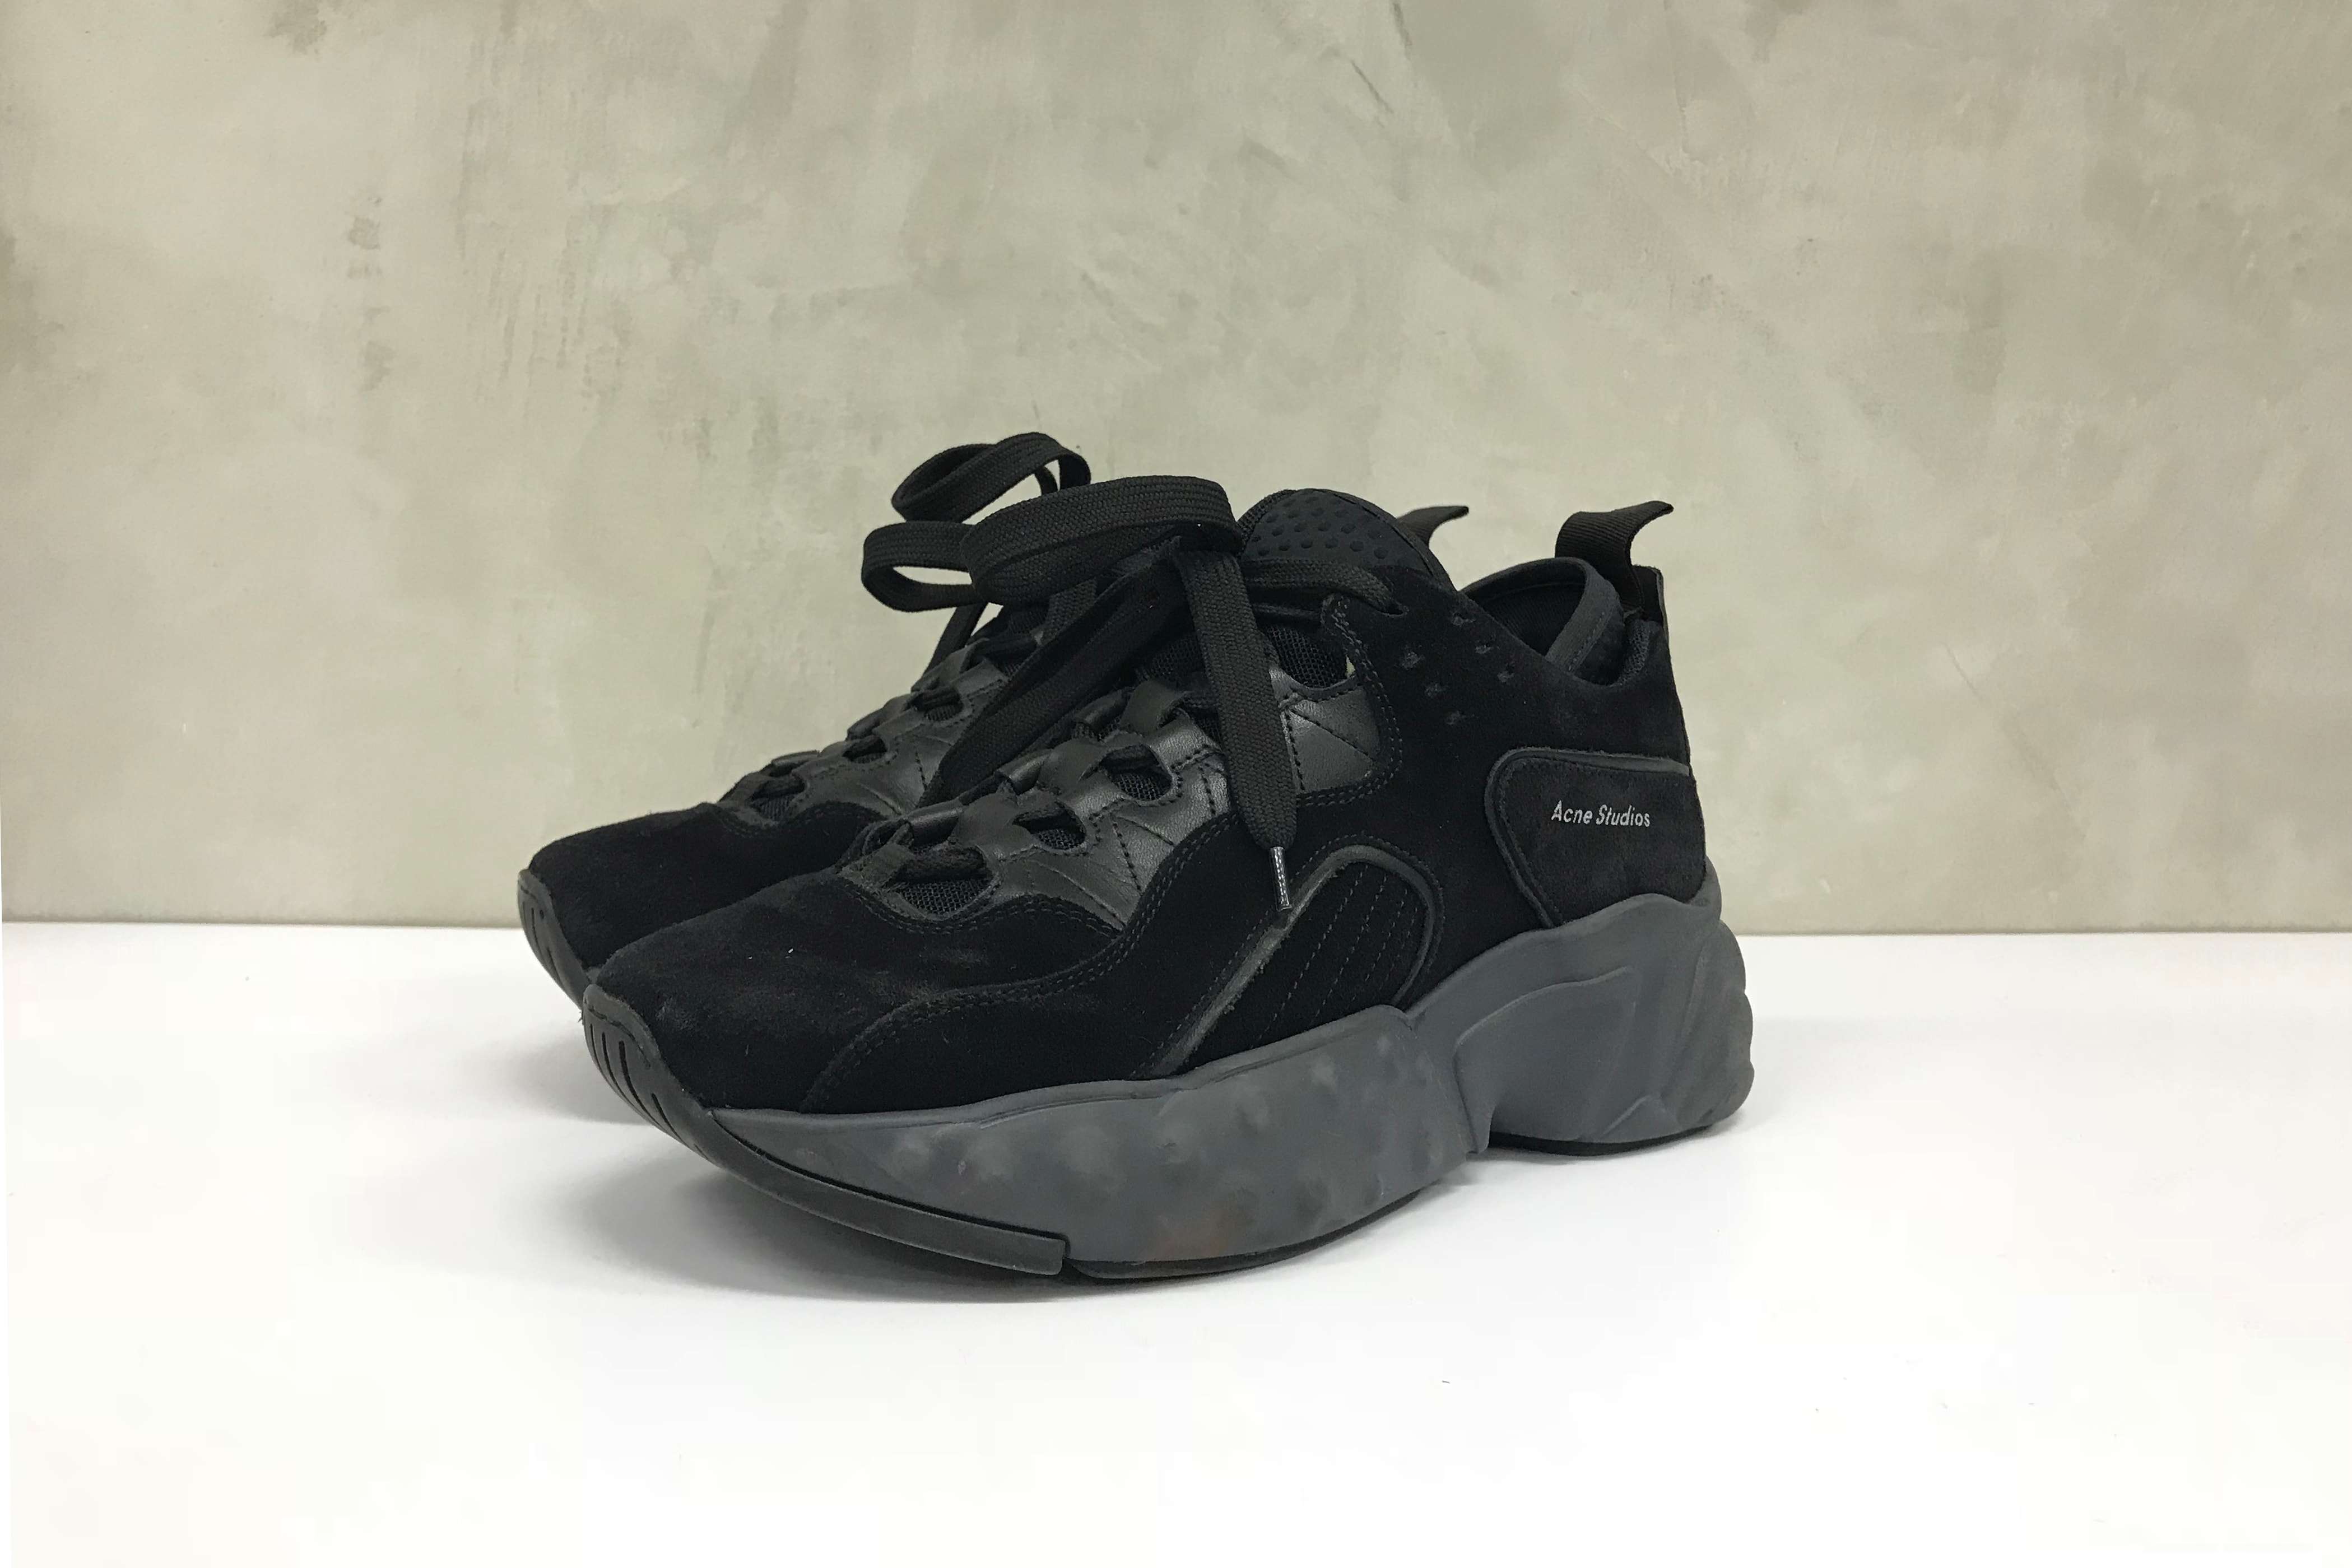 Review: Acne Studios Manhattan Sneaker in Multi Black Chunky Dad Sneaker Information Price